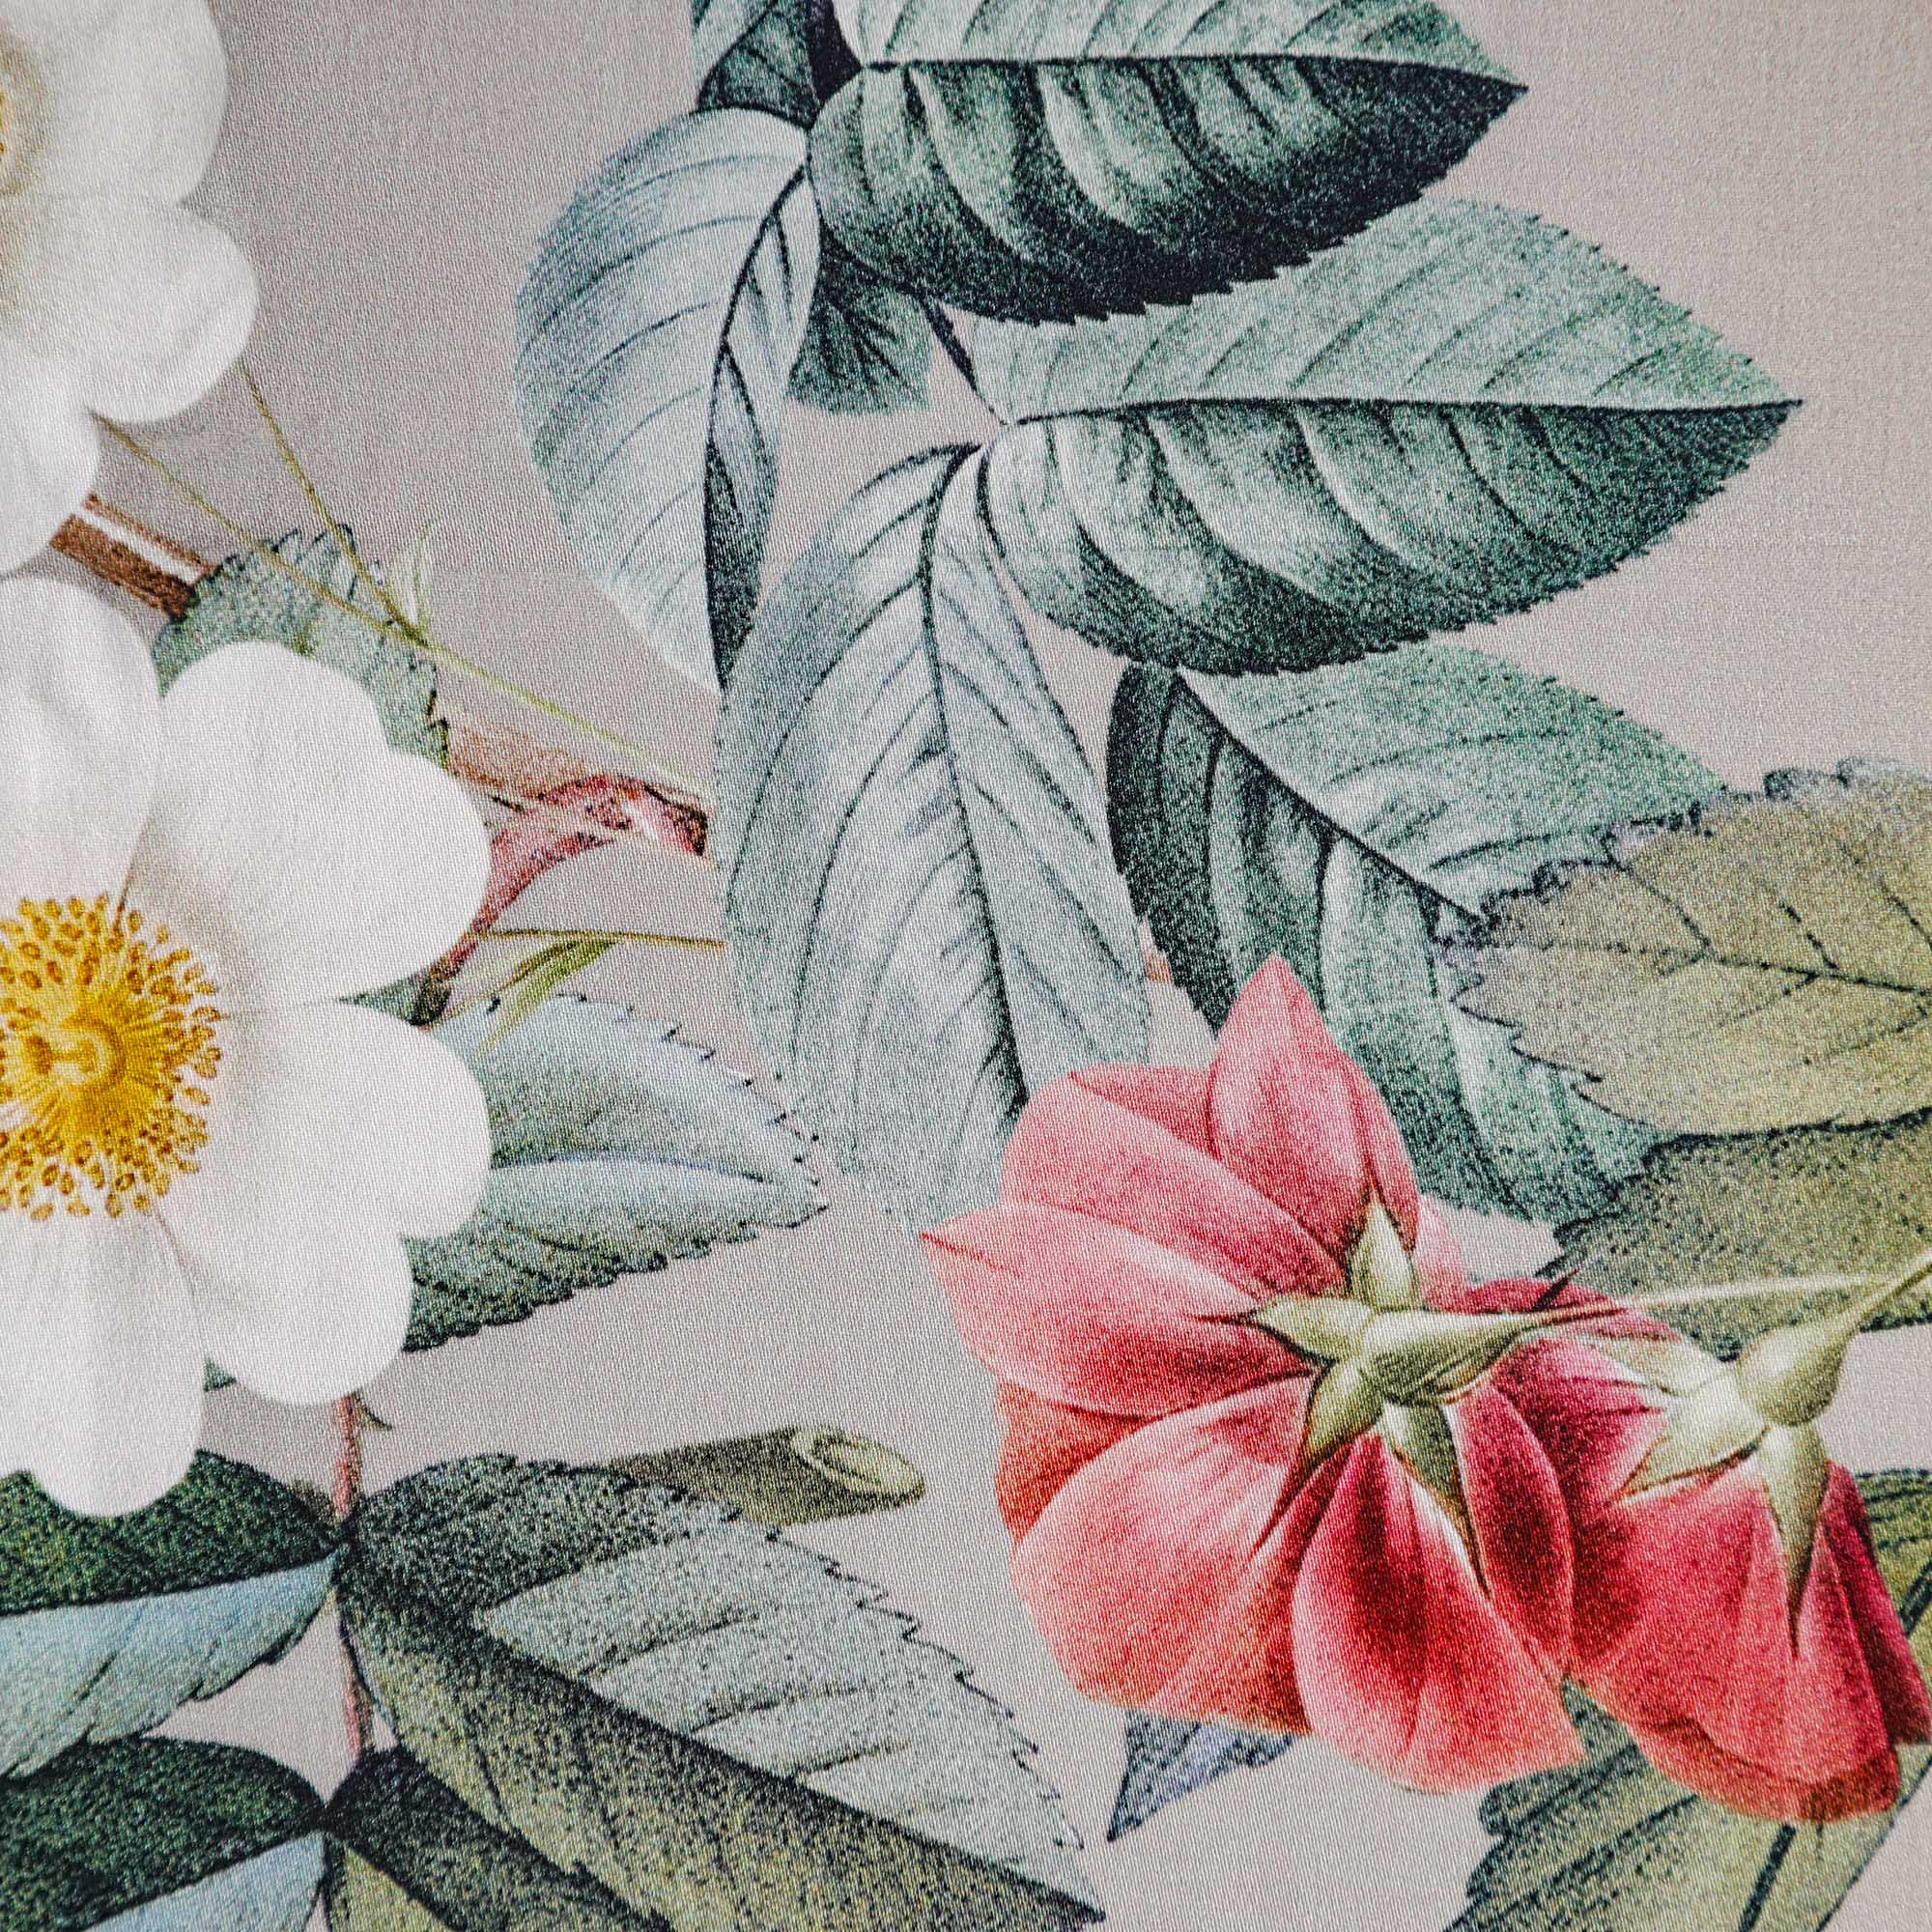 Постельный комплект Wonne Traum elegance cherry blossom Полуторный, размер Полуторный - фото 4